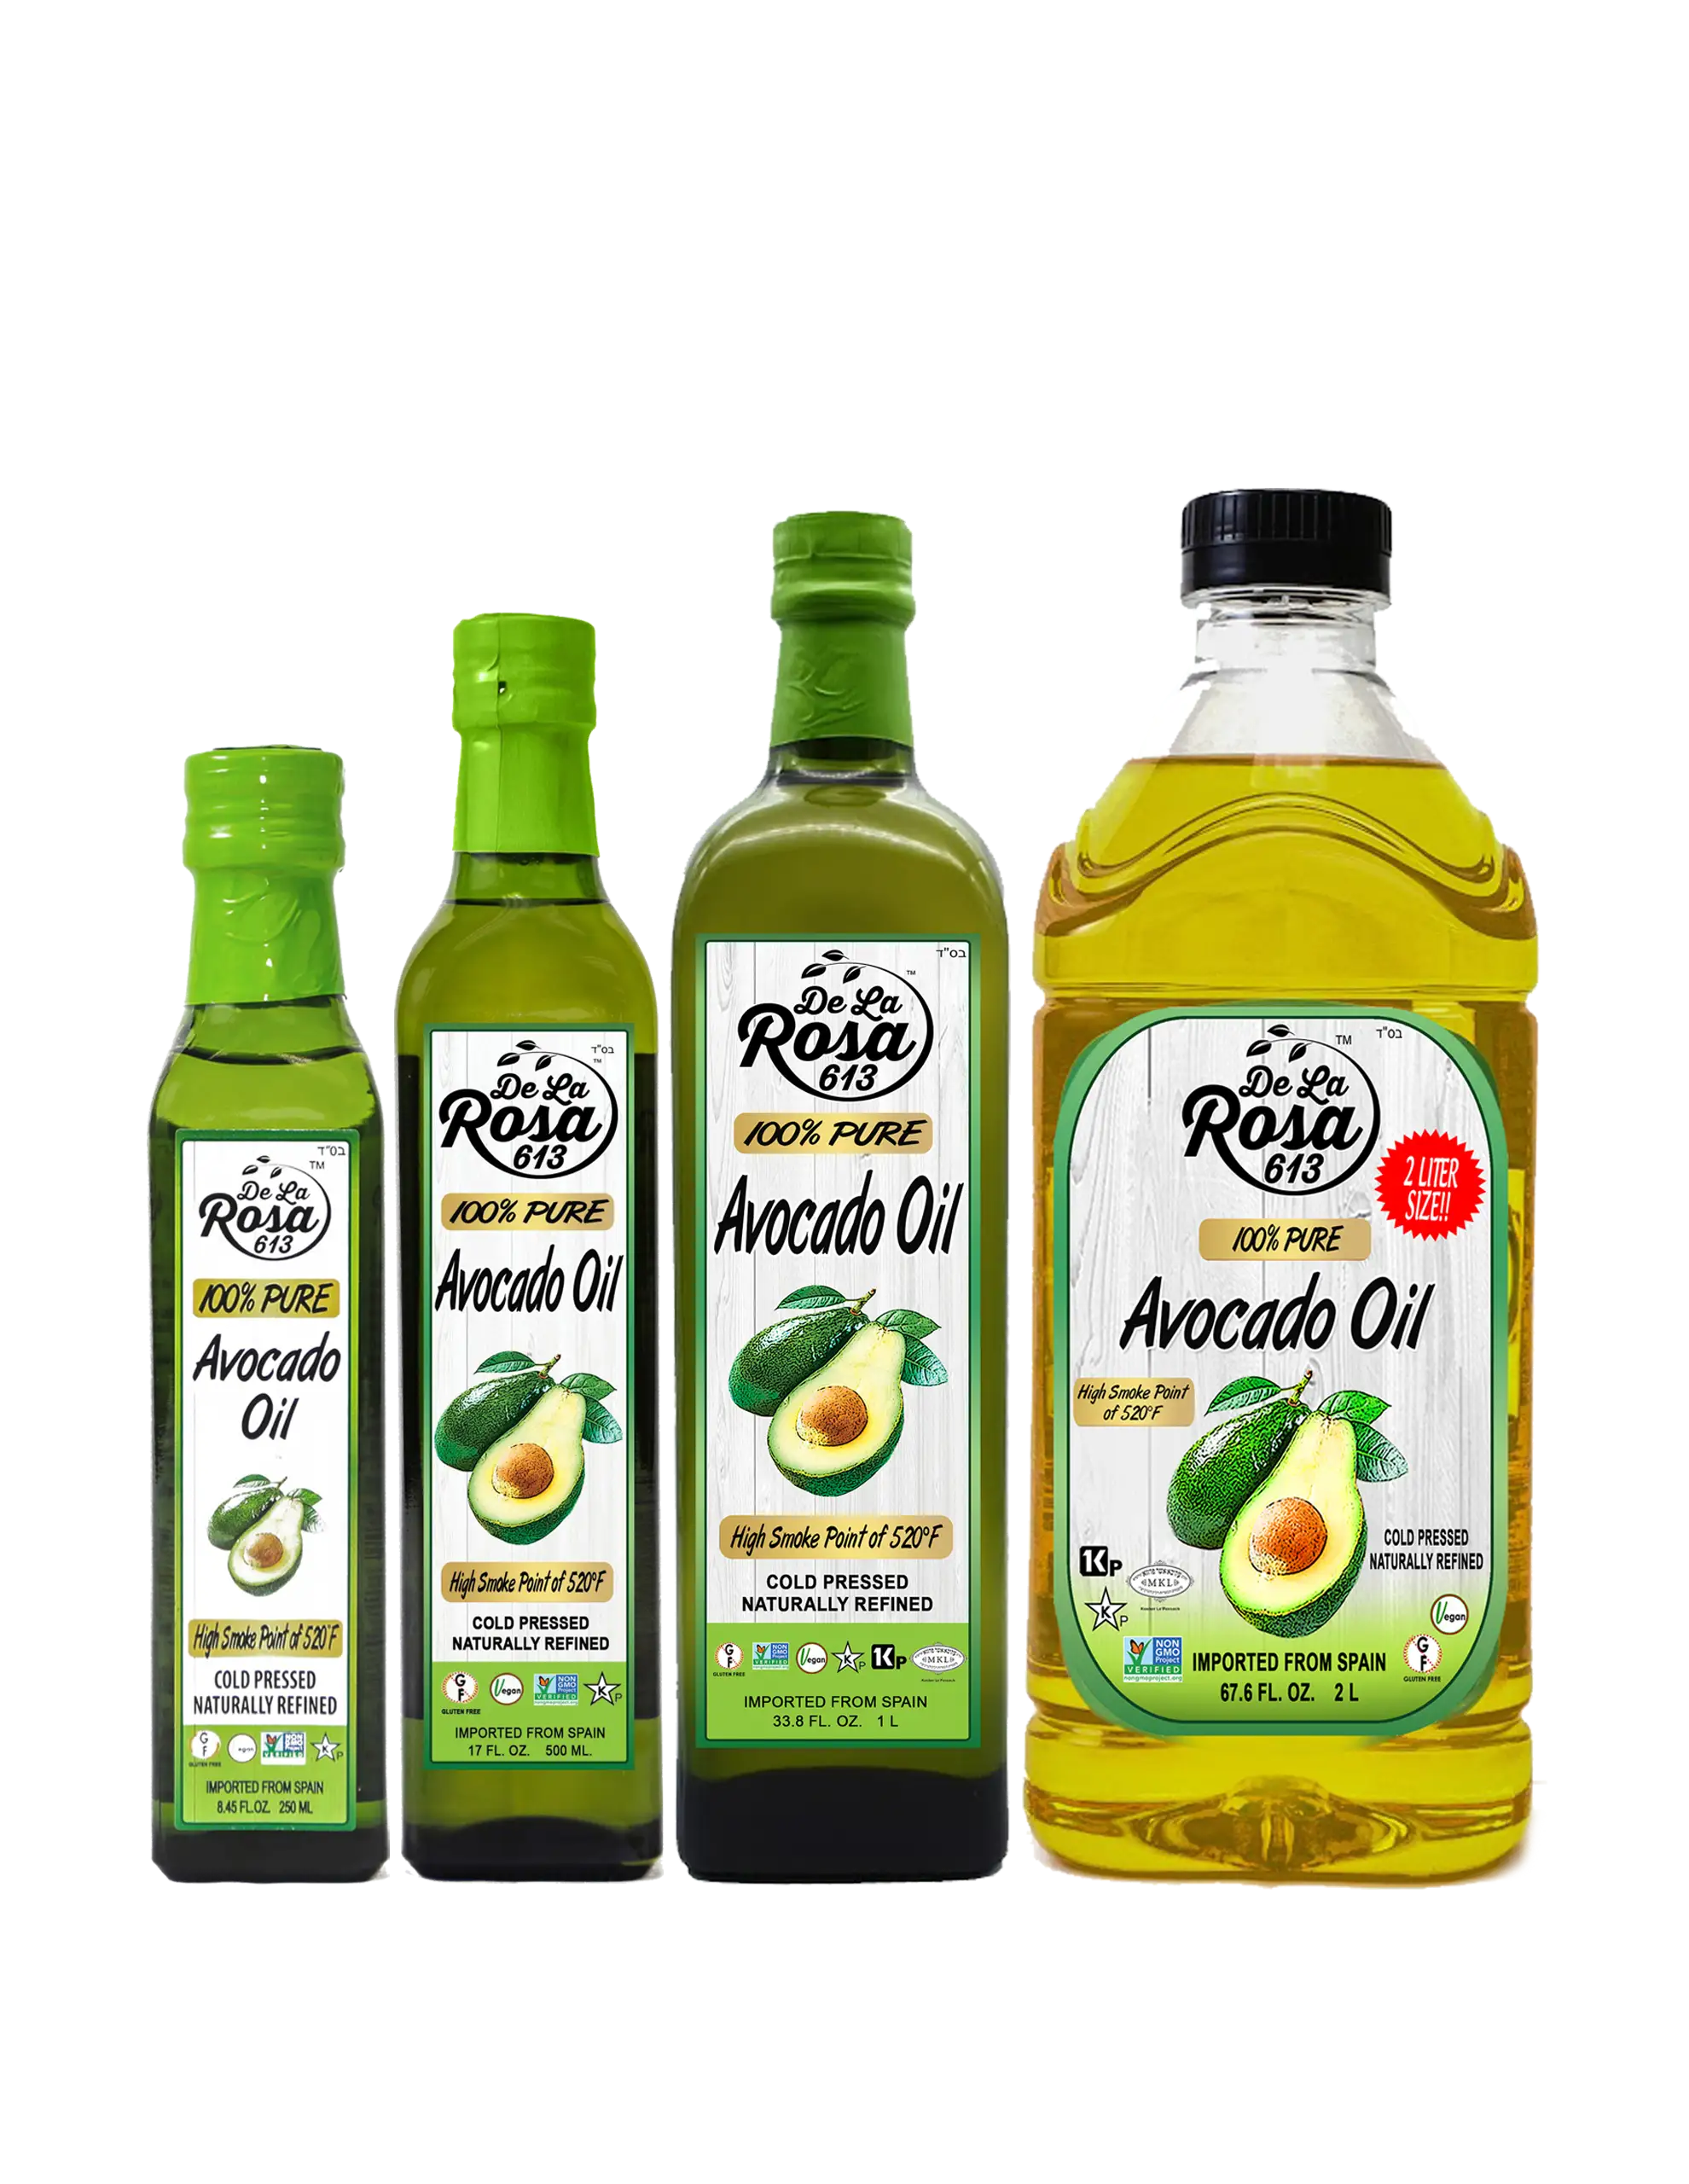 Avocado product image